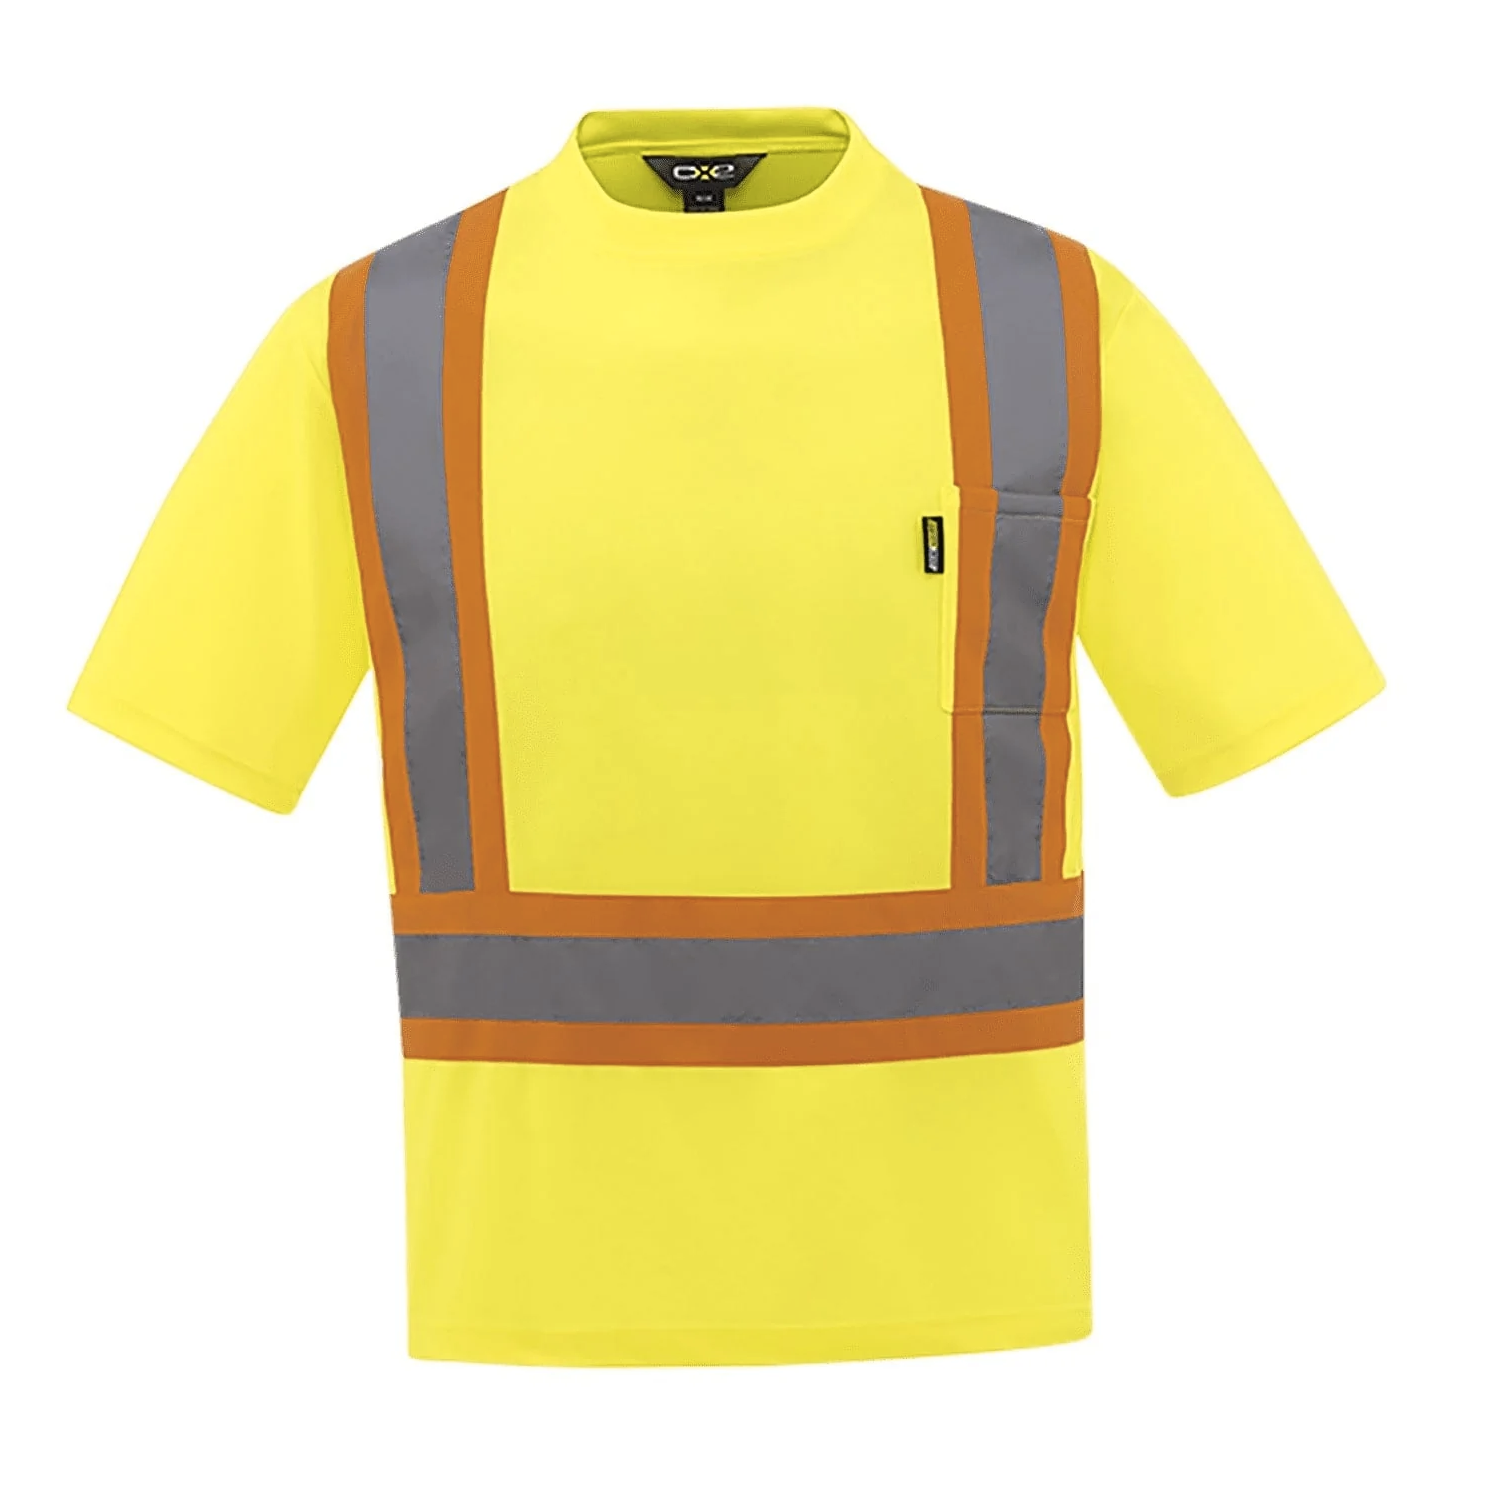 S05960 - Watchman - Men's Hi-Vis Safety T-Shirt - promopig